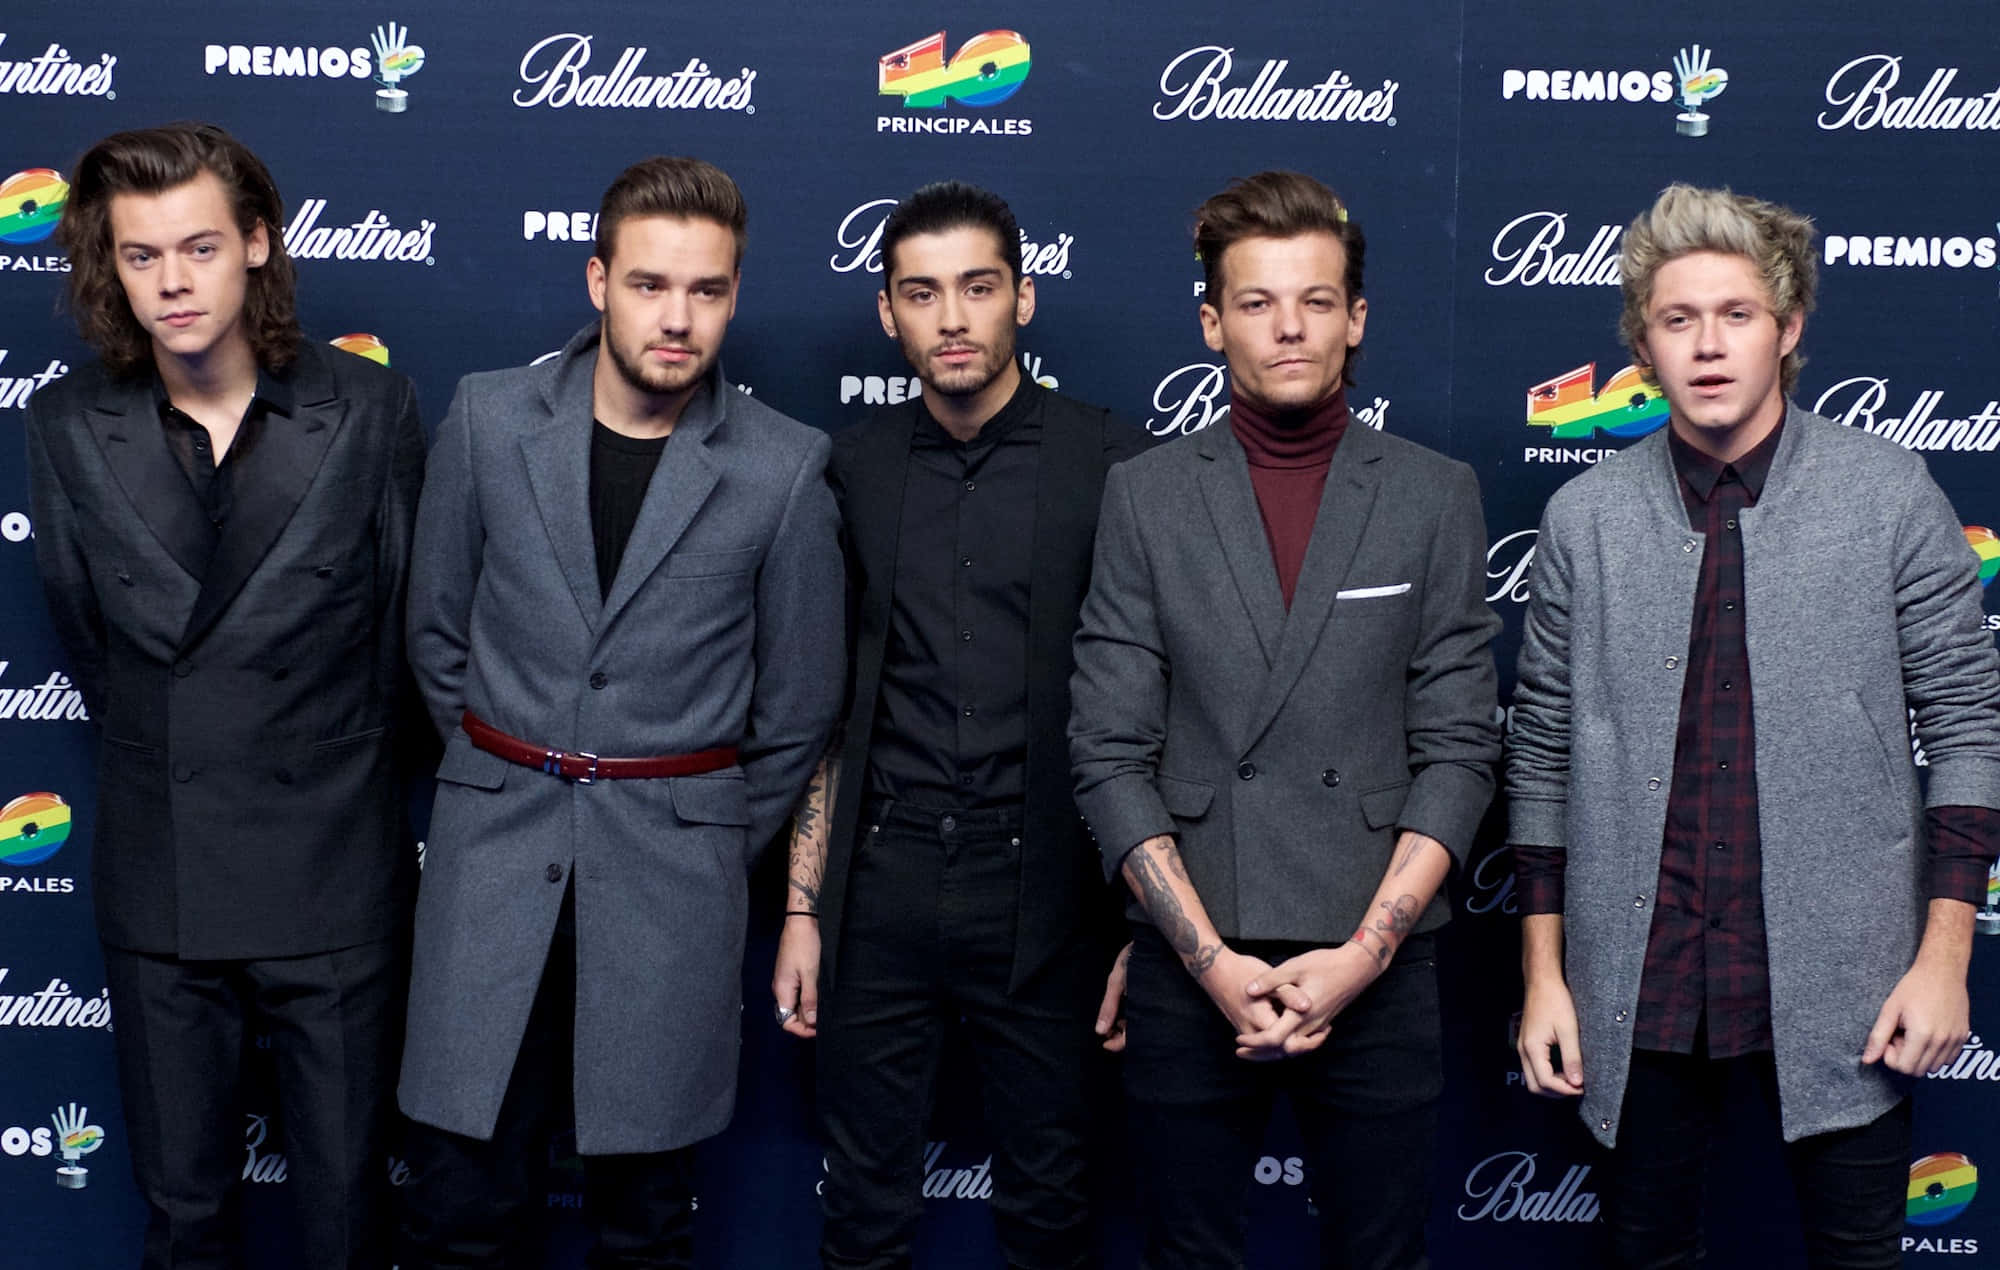 All 5 original members of the British-Irish boy band One Direction